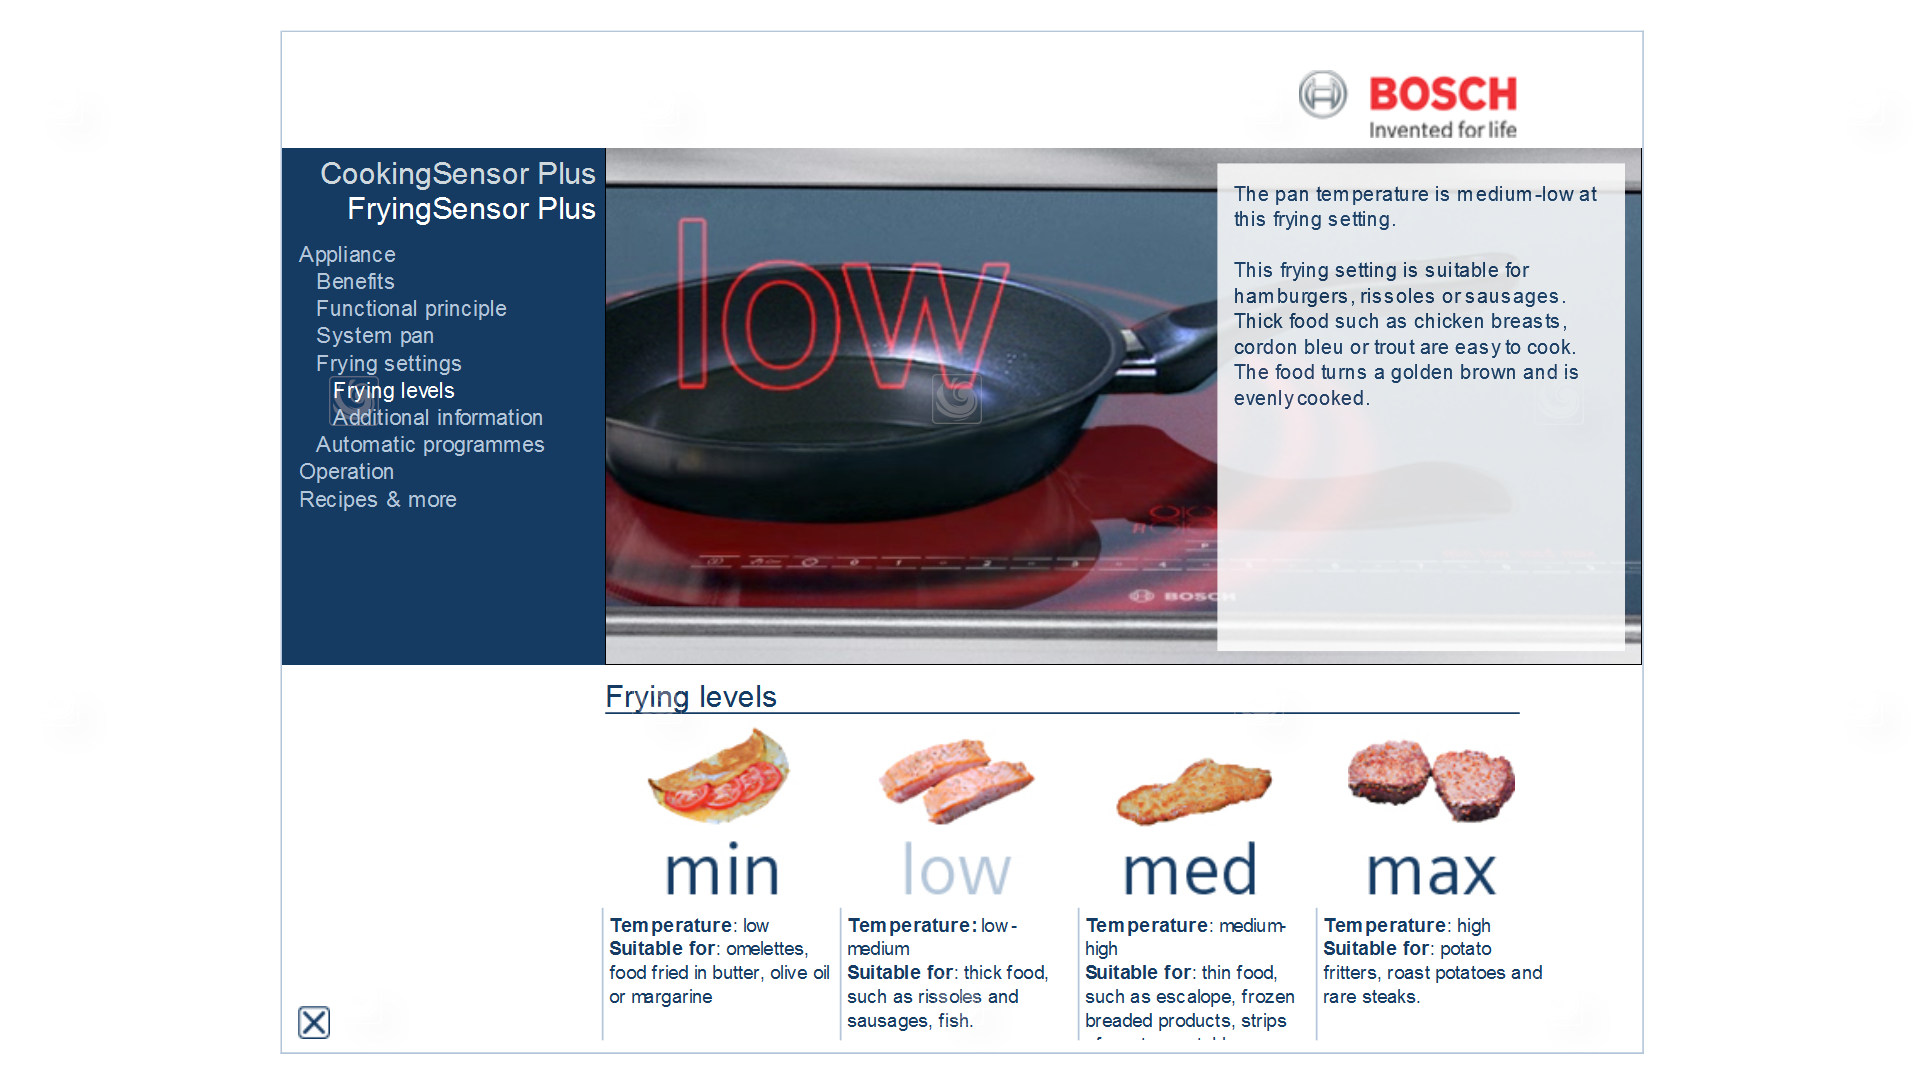 Pantalla de aplicación web para Bosch mostrando distintas niveles de fritura de sus placas de inducción